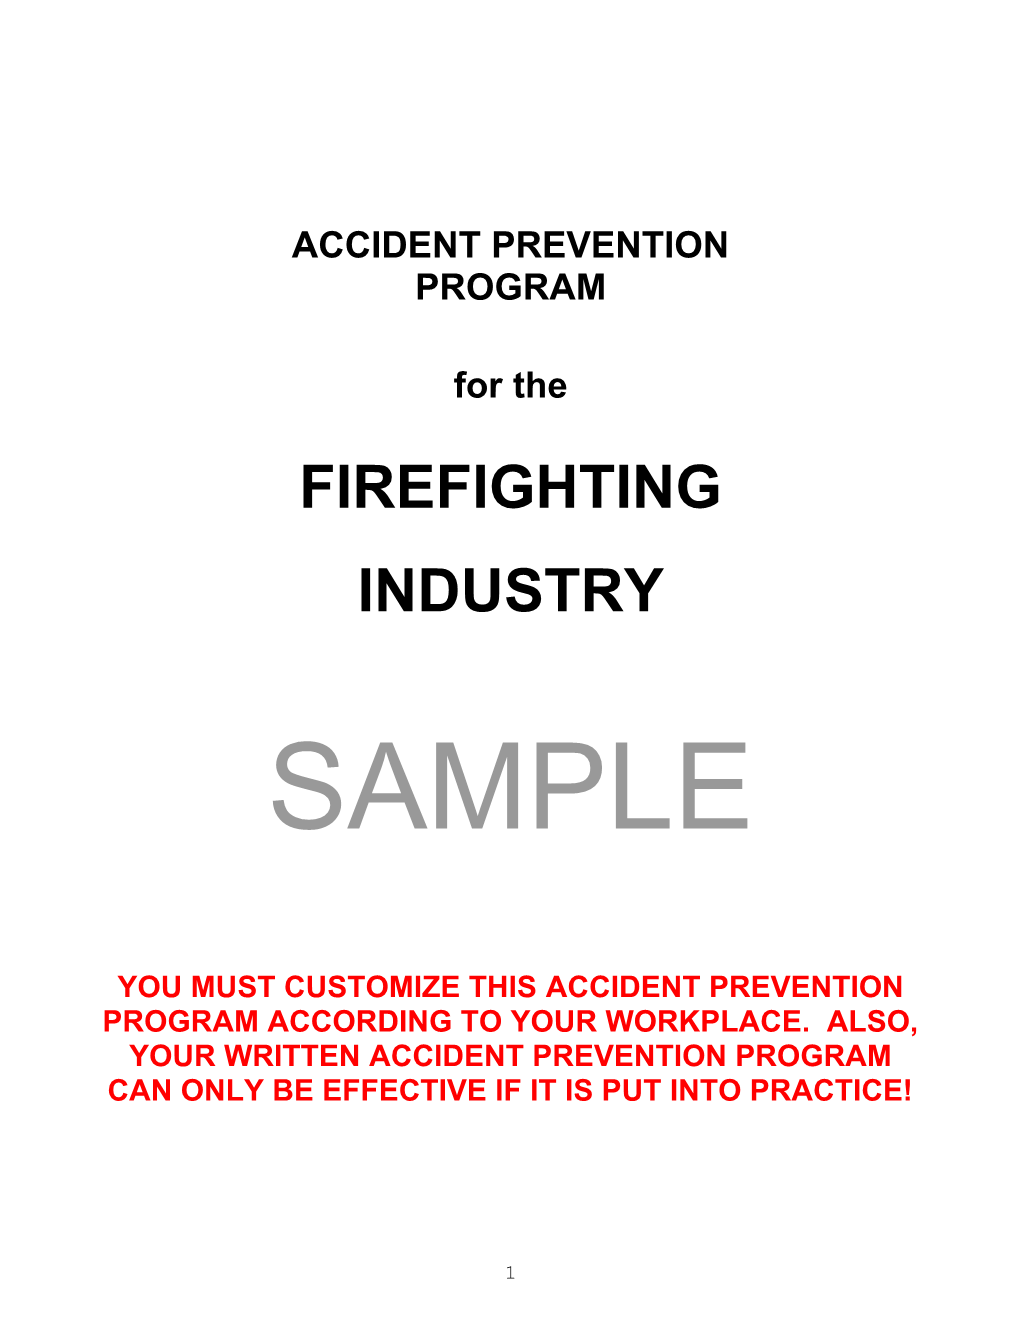 SAMPLE ACCIDENT PREVENTION PROGRAM for the FIREFIGHTING INDUSTRY